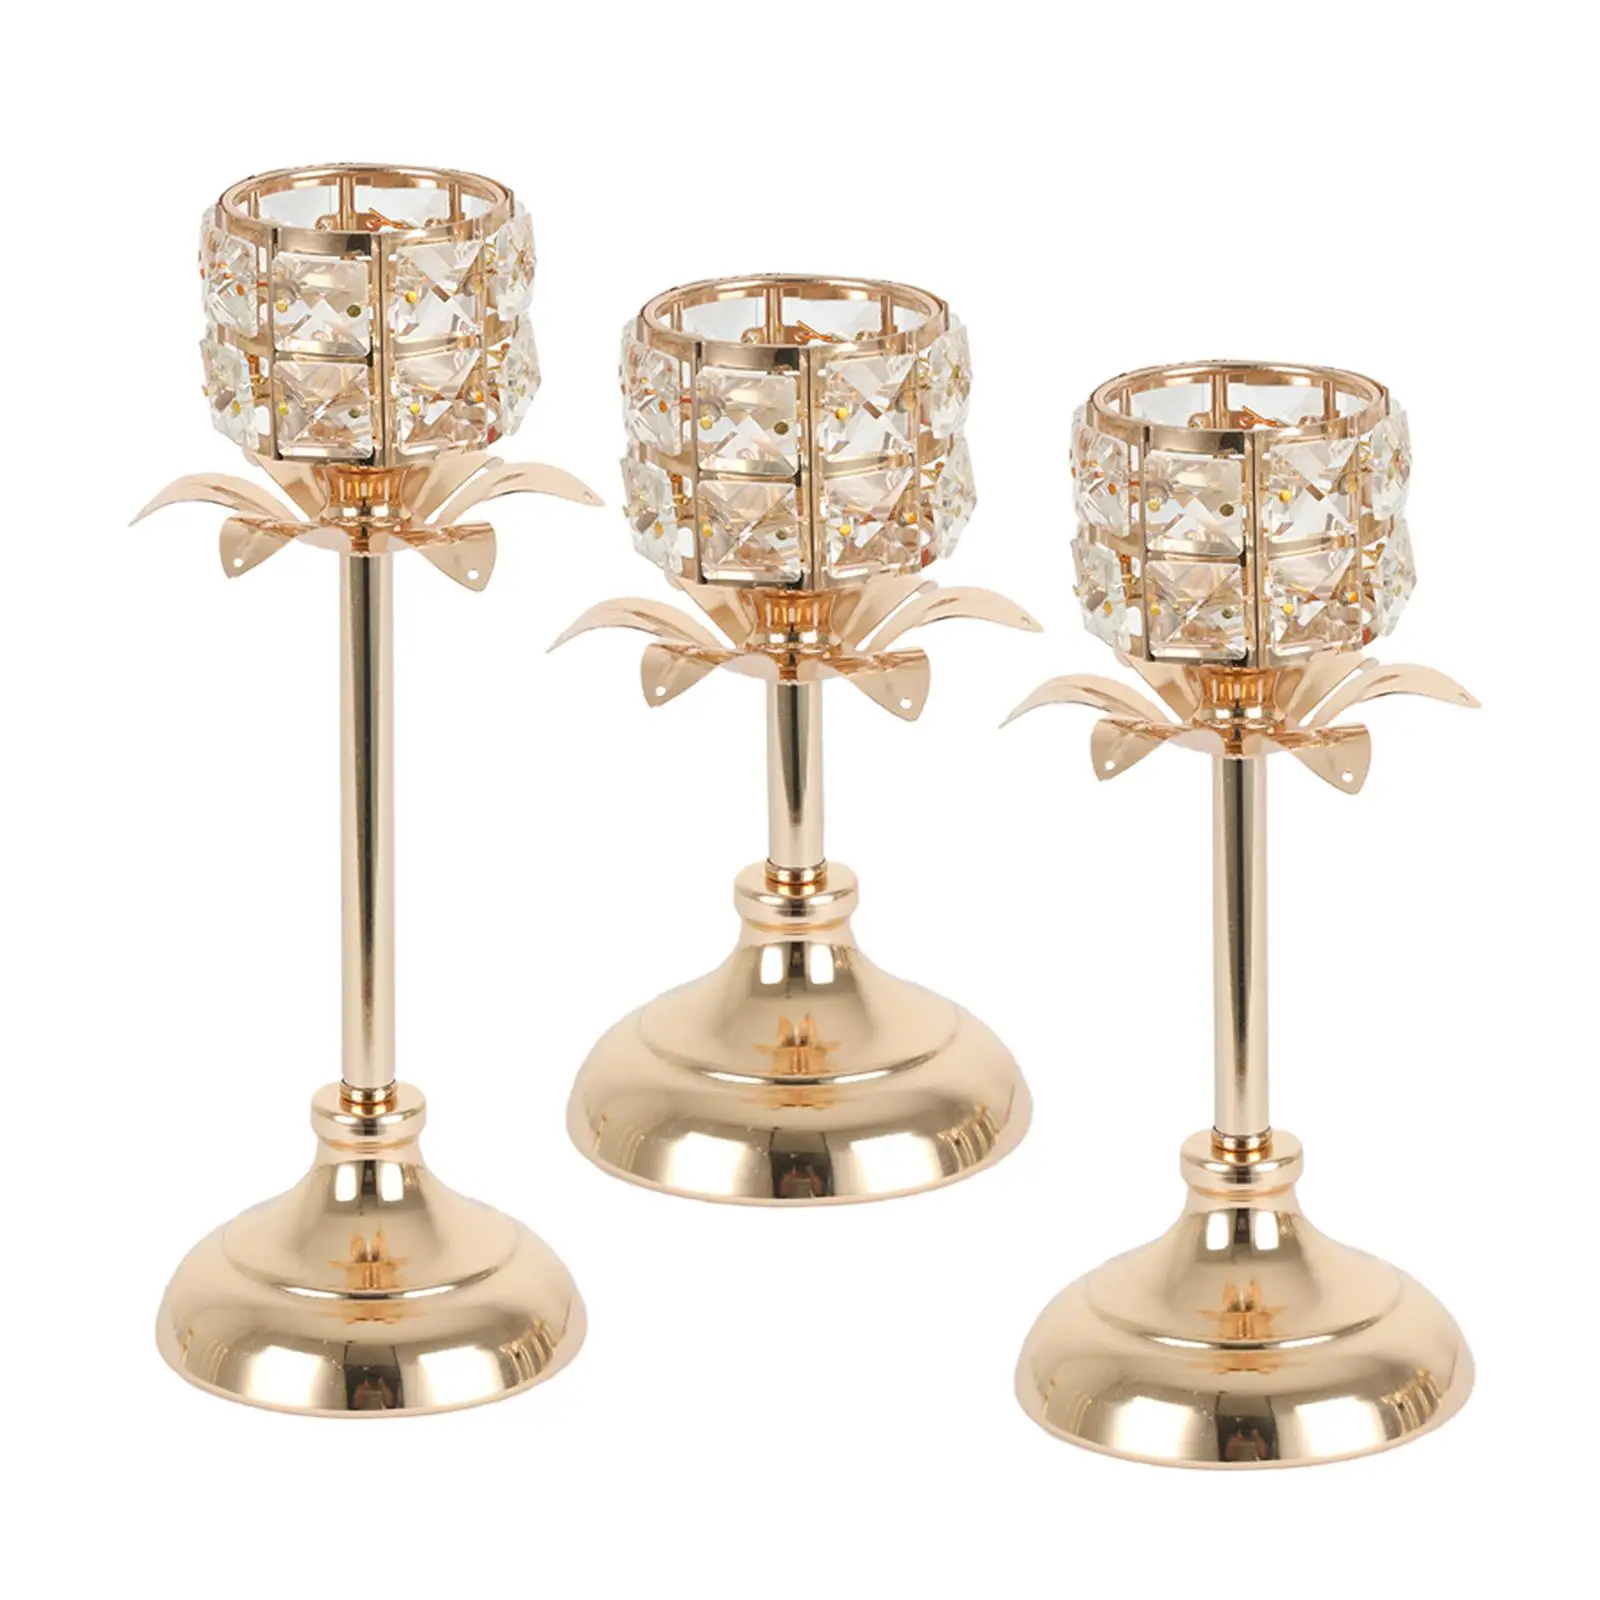 Gold Candlestick Metal Pillar Stand Ornaments Centerpiece Centerpieces Gift for Wedding Tea Light Parties Table Living Room